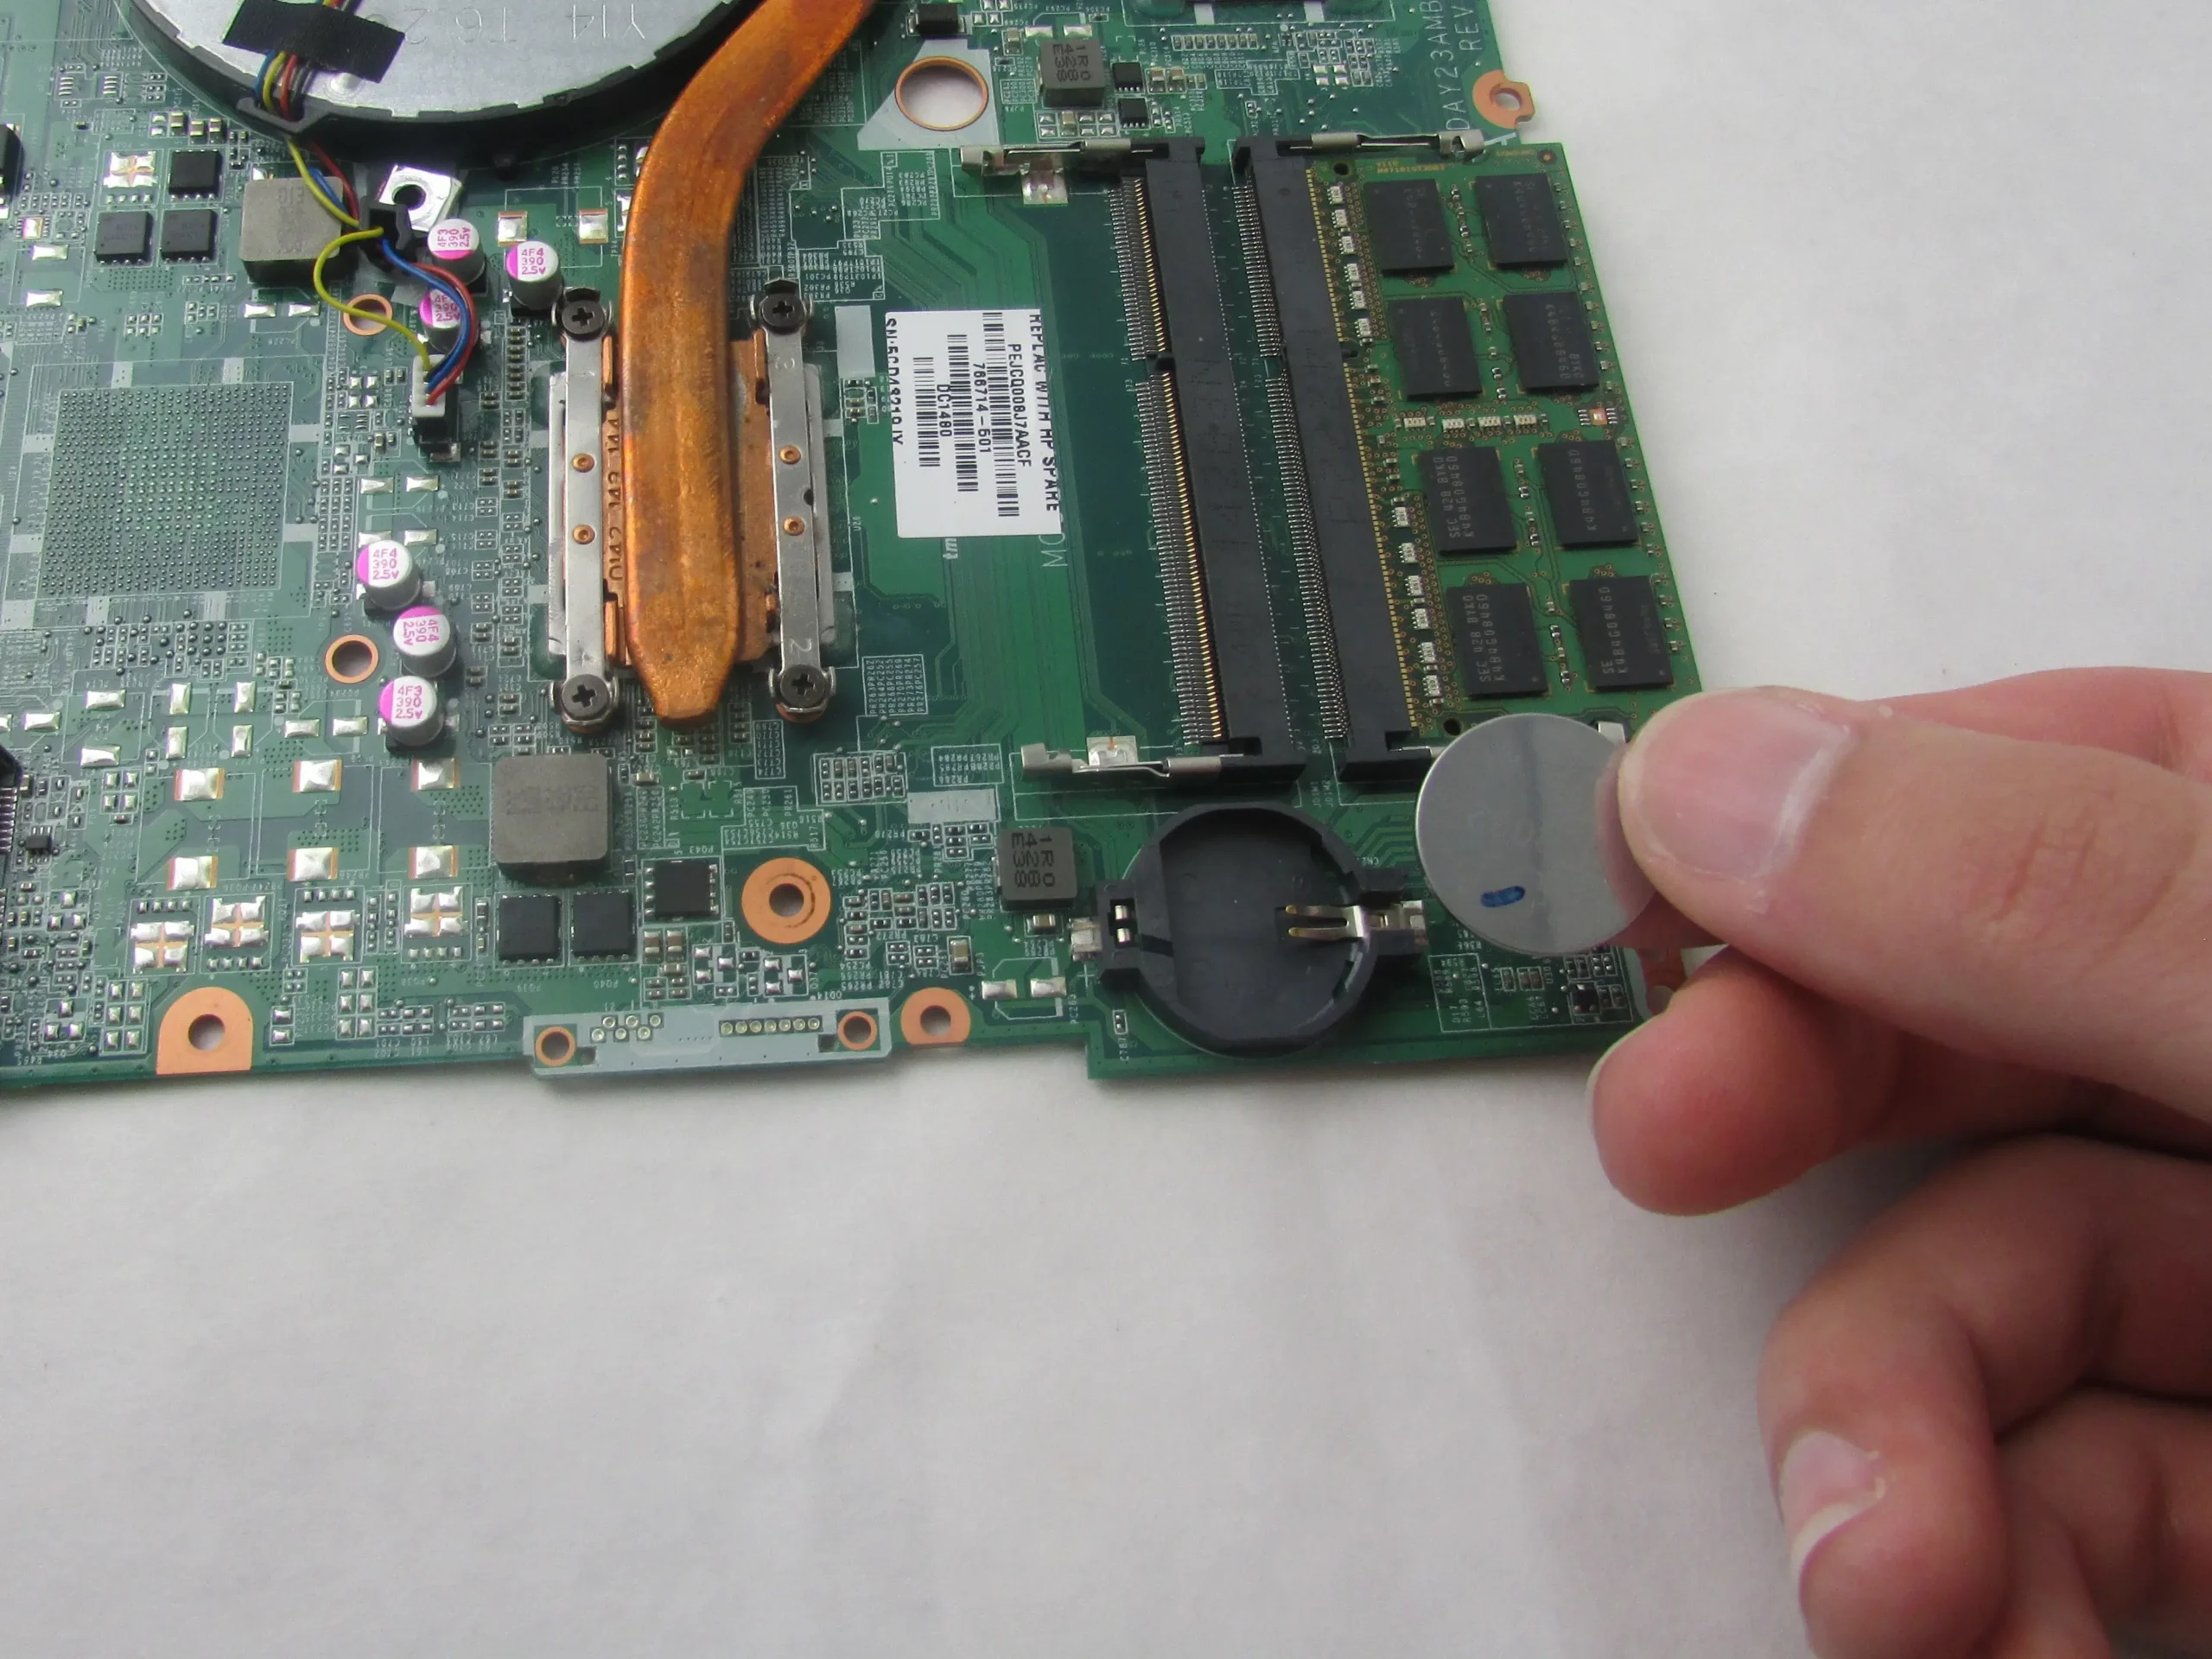 hewlett packard cmos - Will HP laptop work without CMOS battery